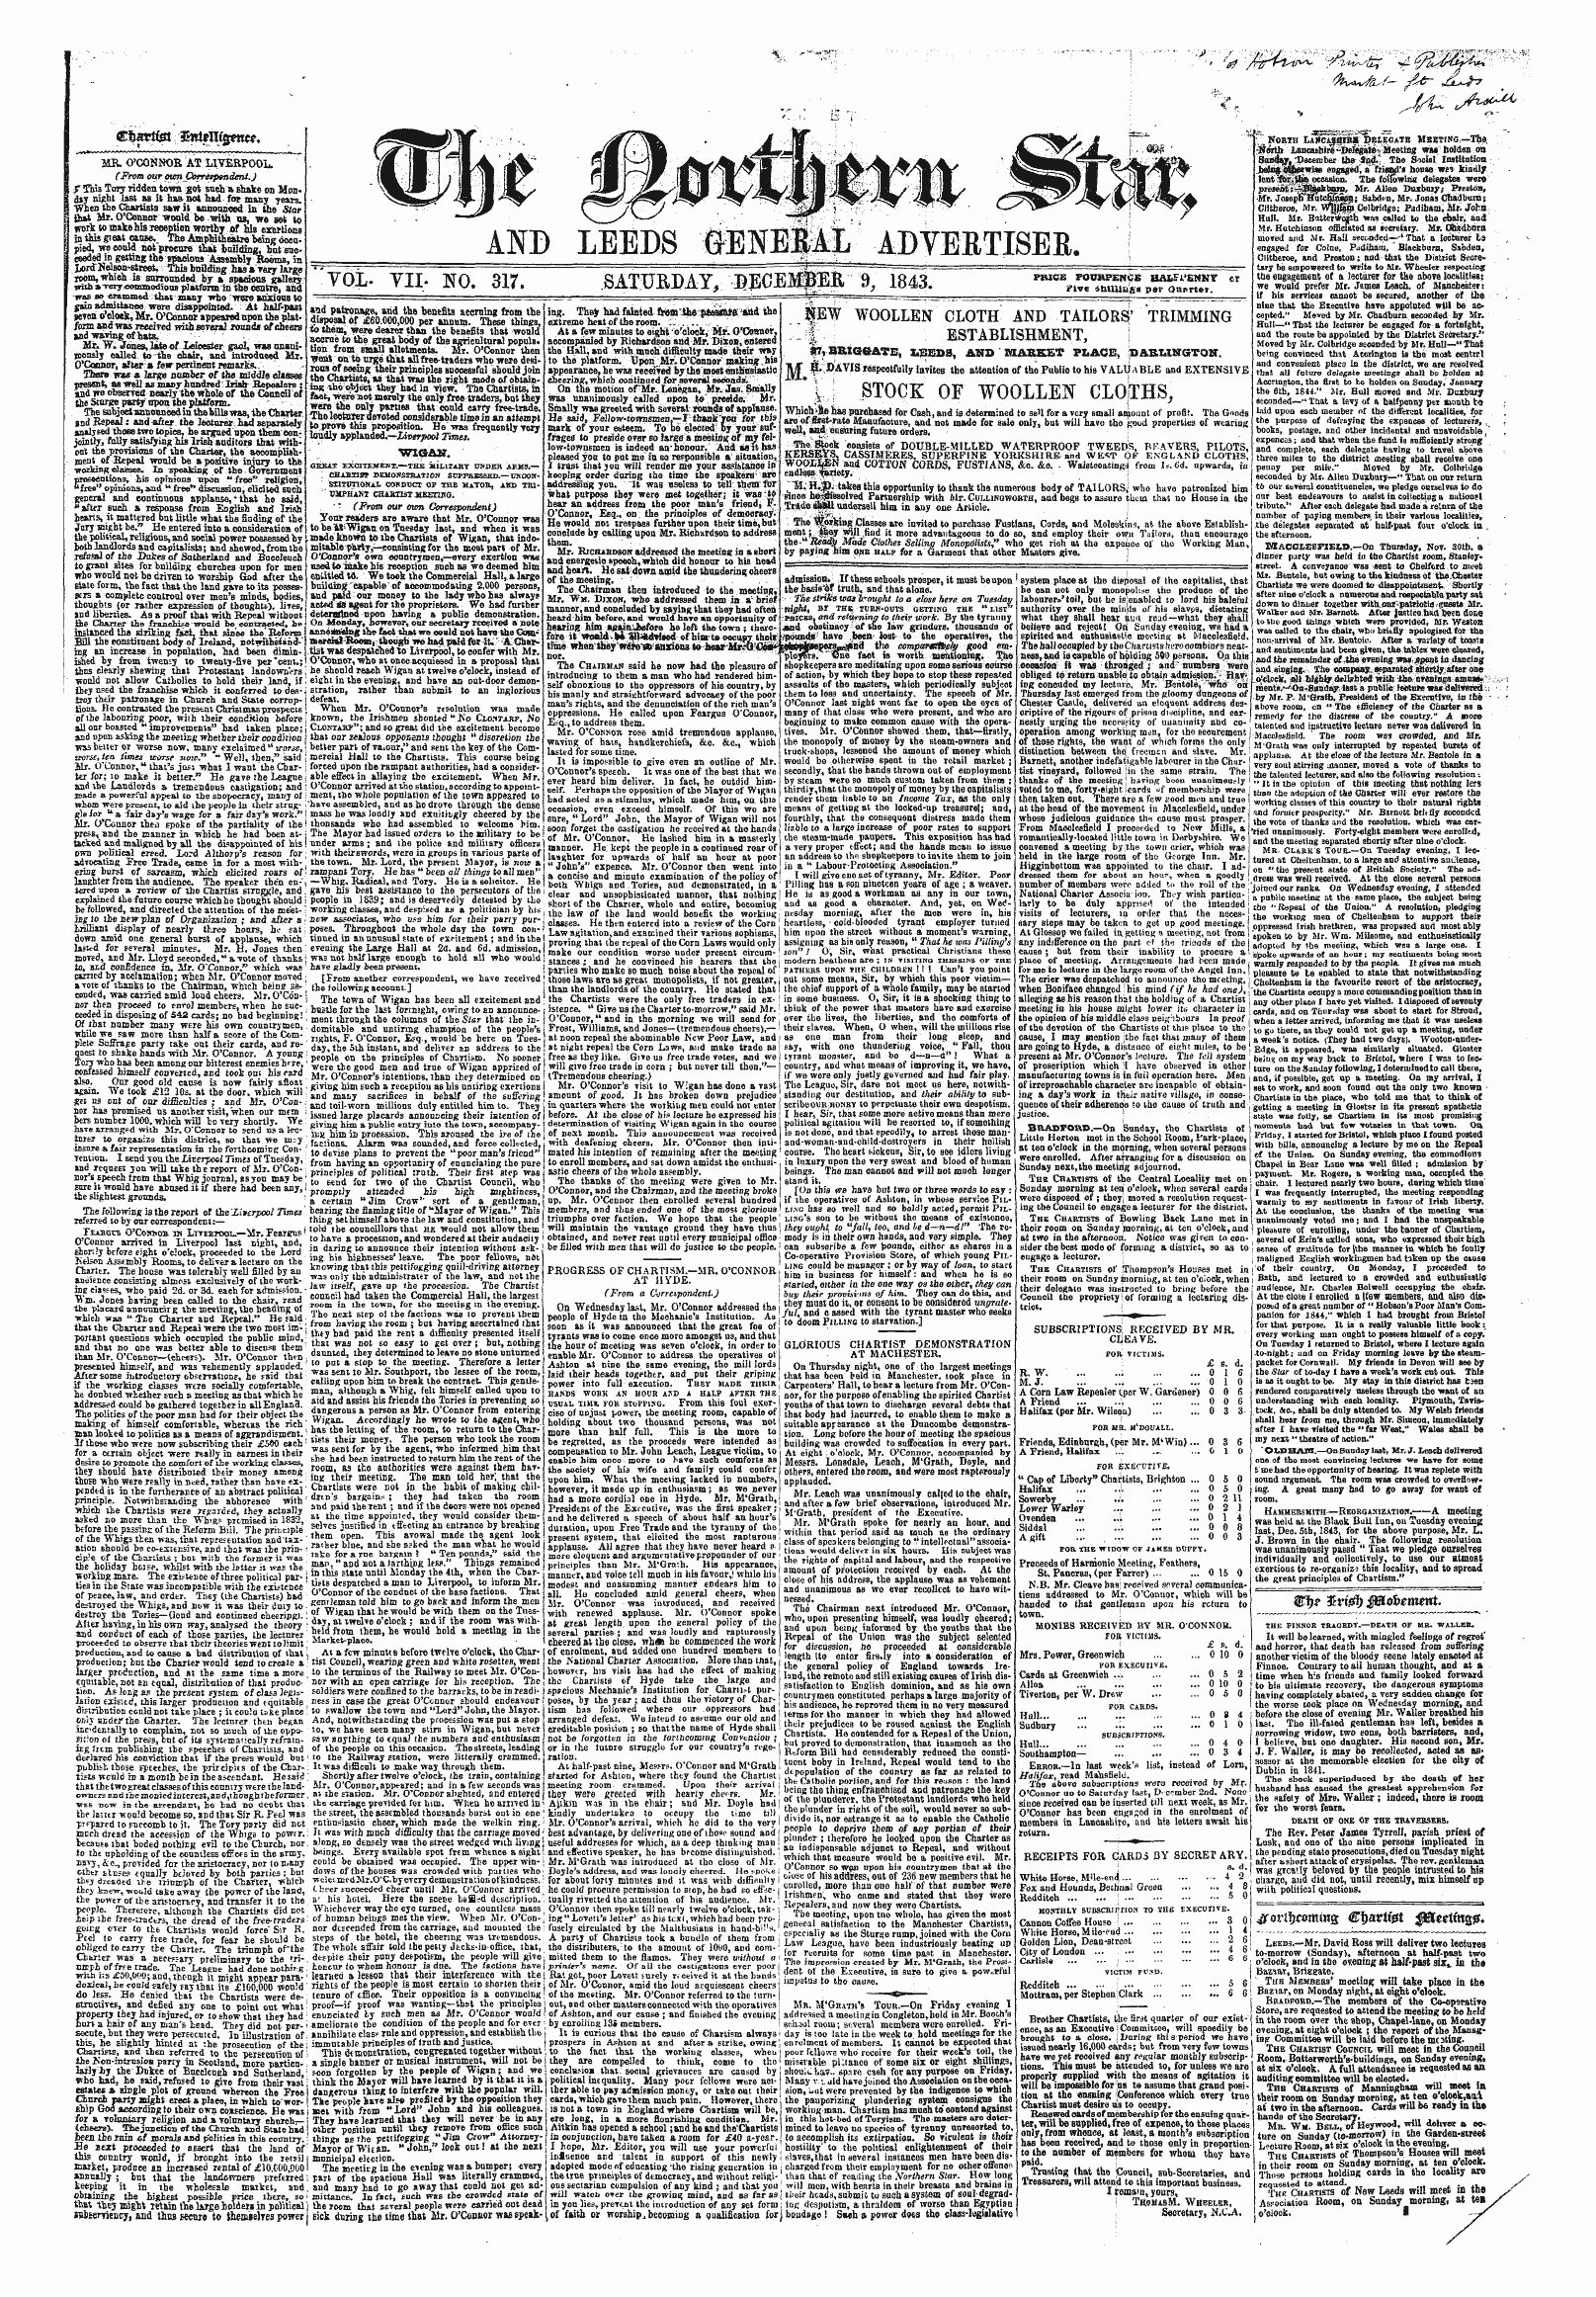 Northern Star (1837-1852): jS F Y, 4th edition - . J Pituuj^Ixuo ** Vm,Tj**+* 2*3)* Erfefy $&Ctoemmt